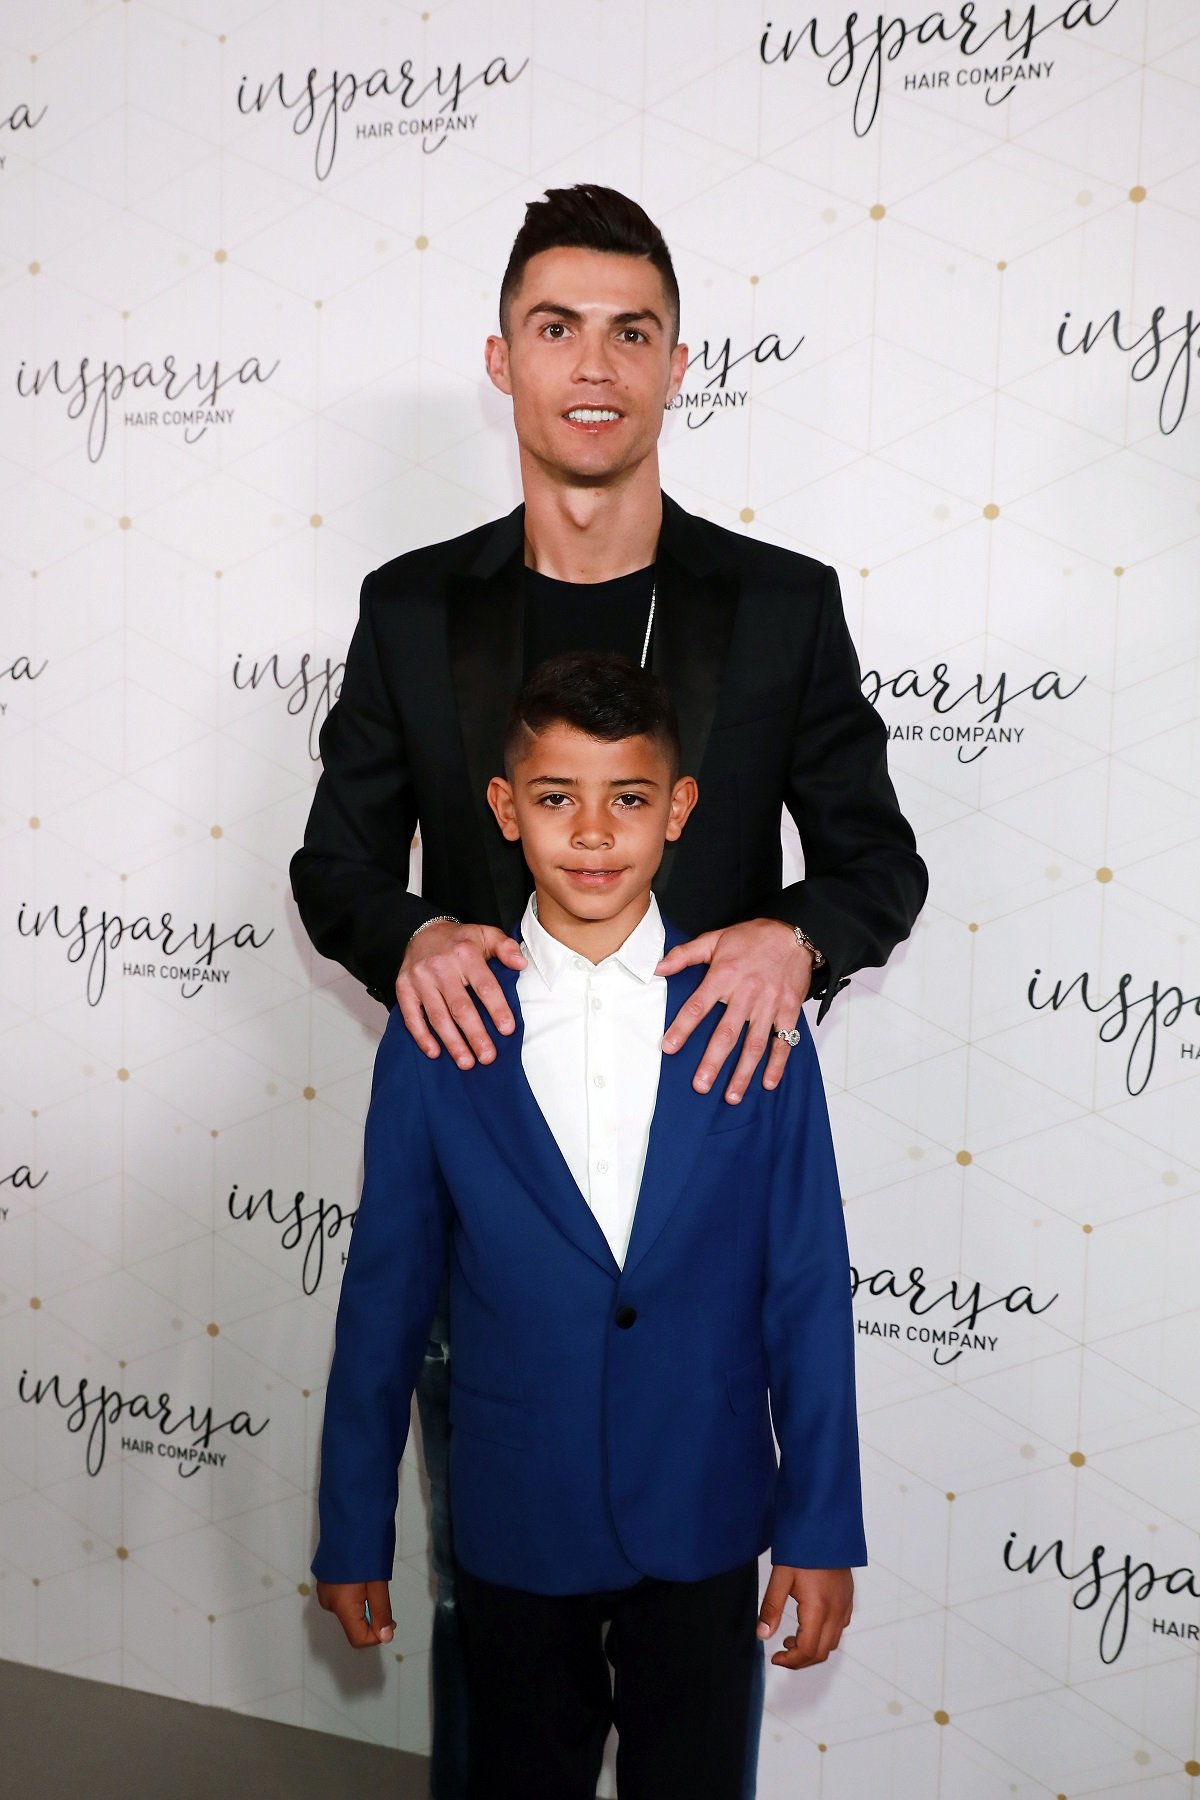 Cristiano Ronaldo and his son, Cristiano Ronaldo Jr., pose for photo at 'Isparya' inauguration